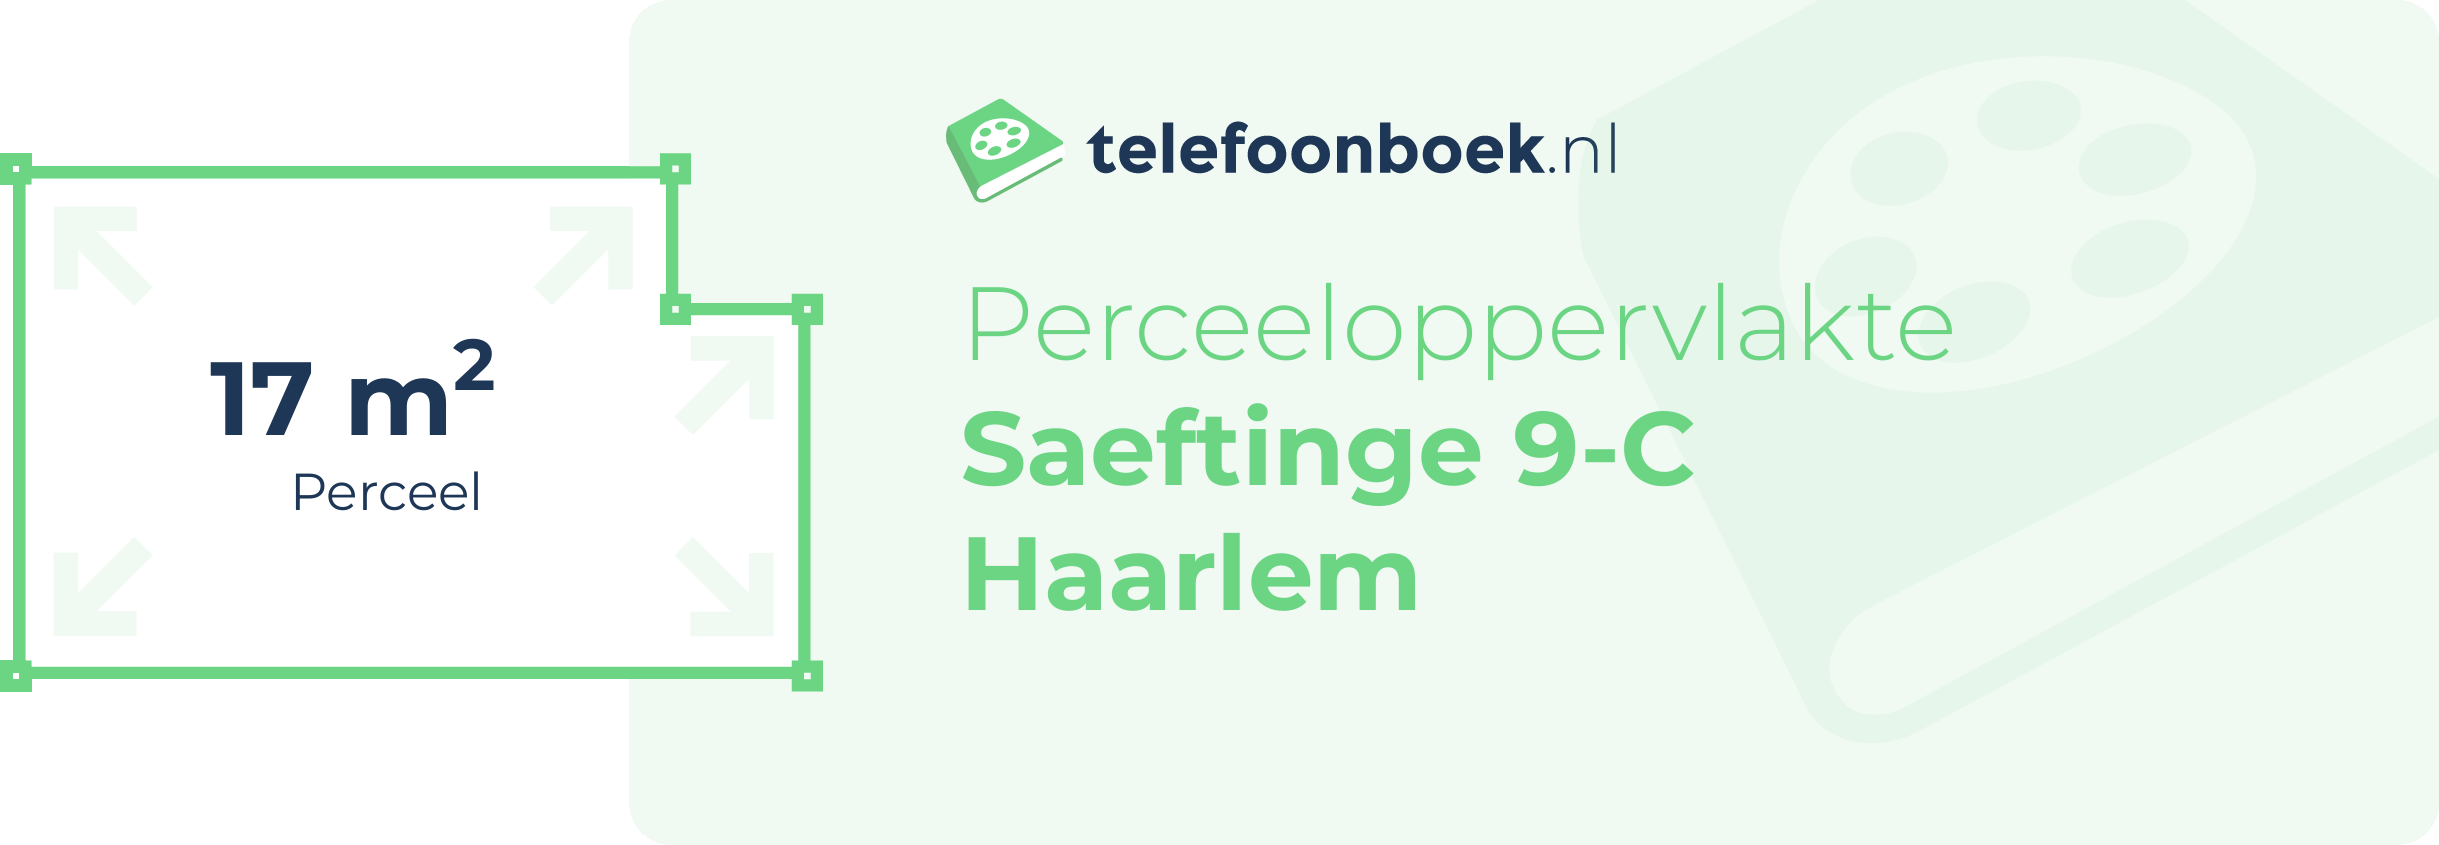 Perceeloppervlakte Saeftinge 9-C Haarlem